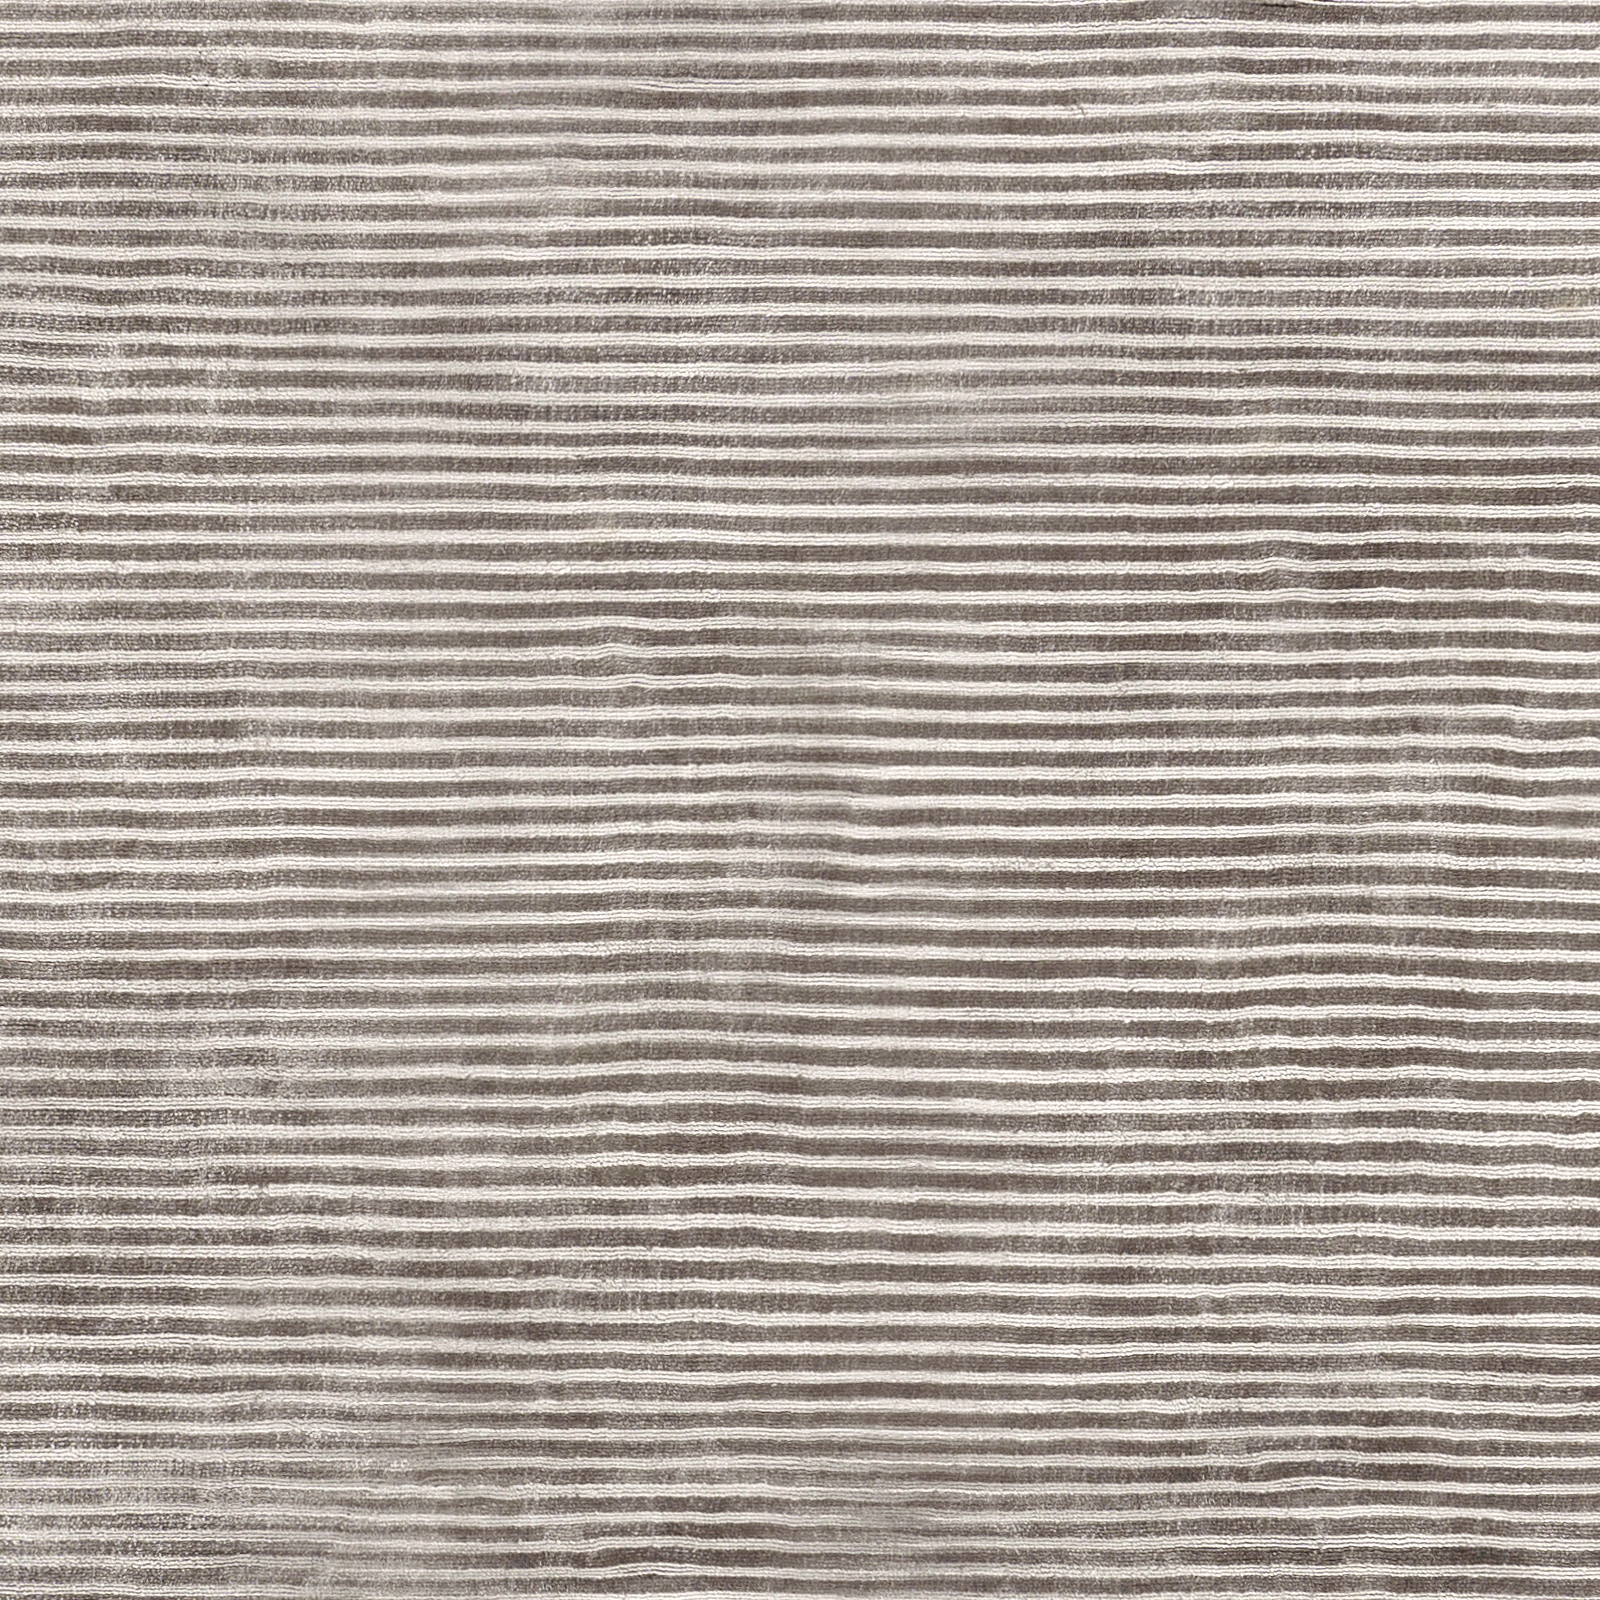 Graphite Rug, 12' x 15' - Image 2